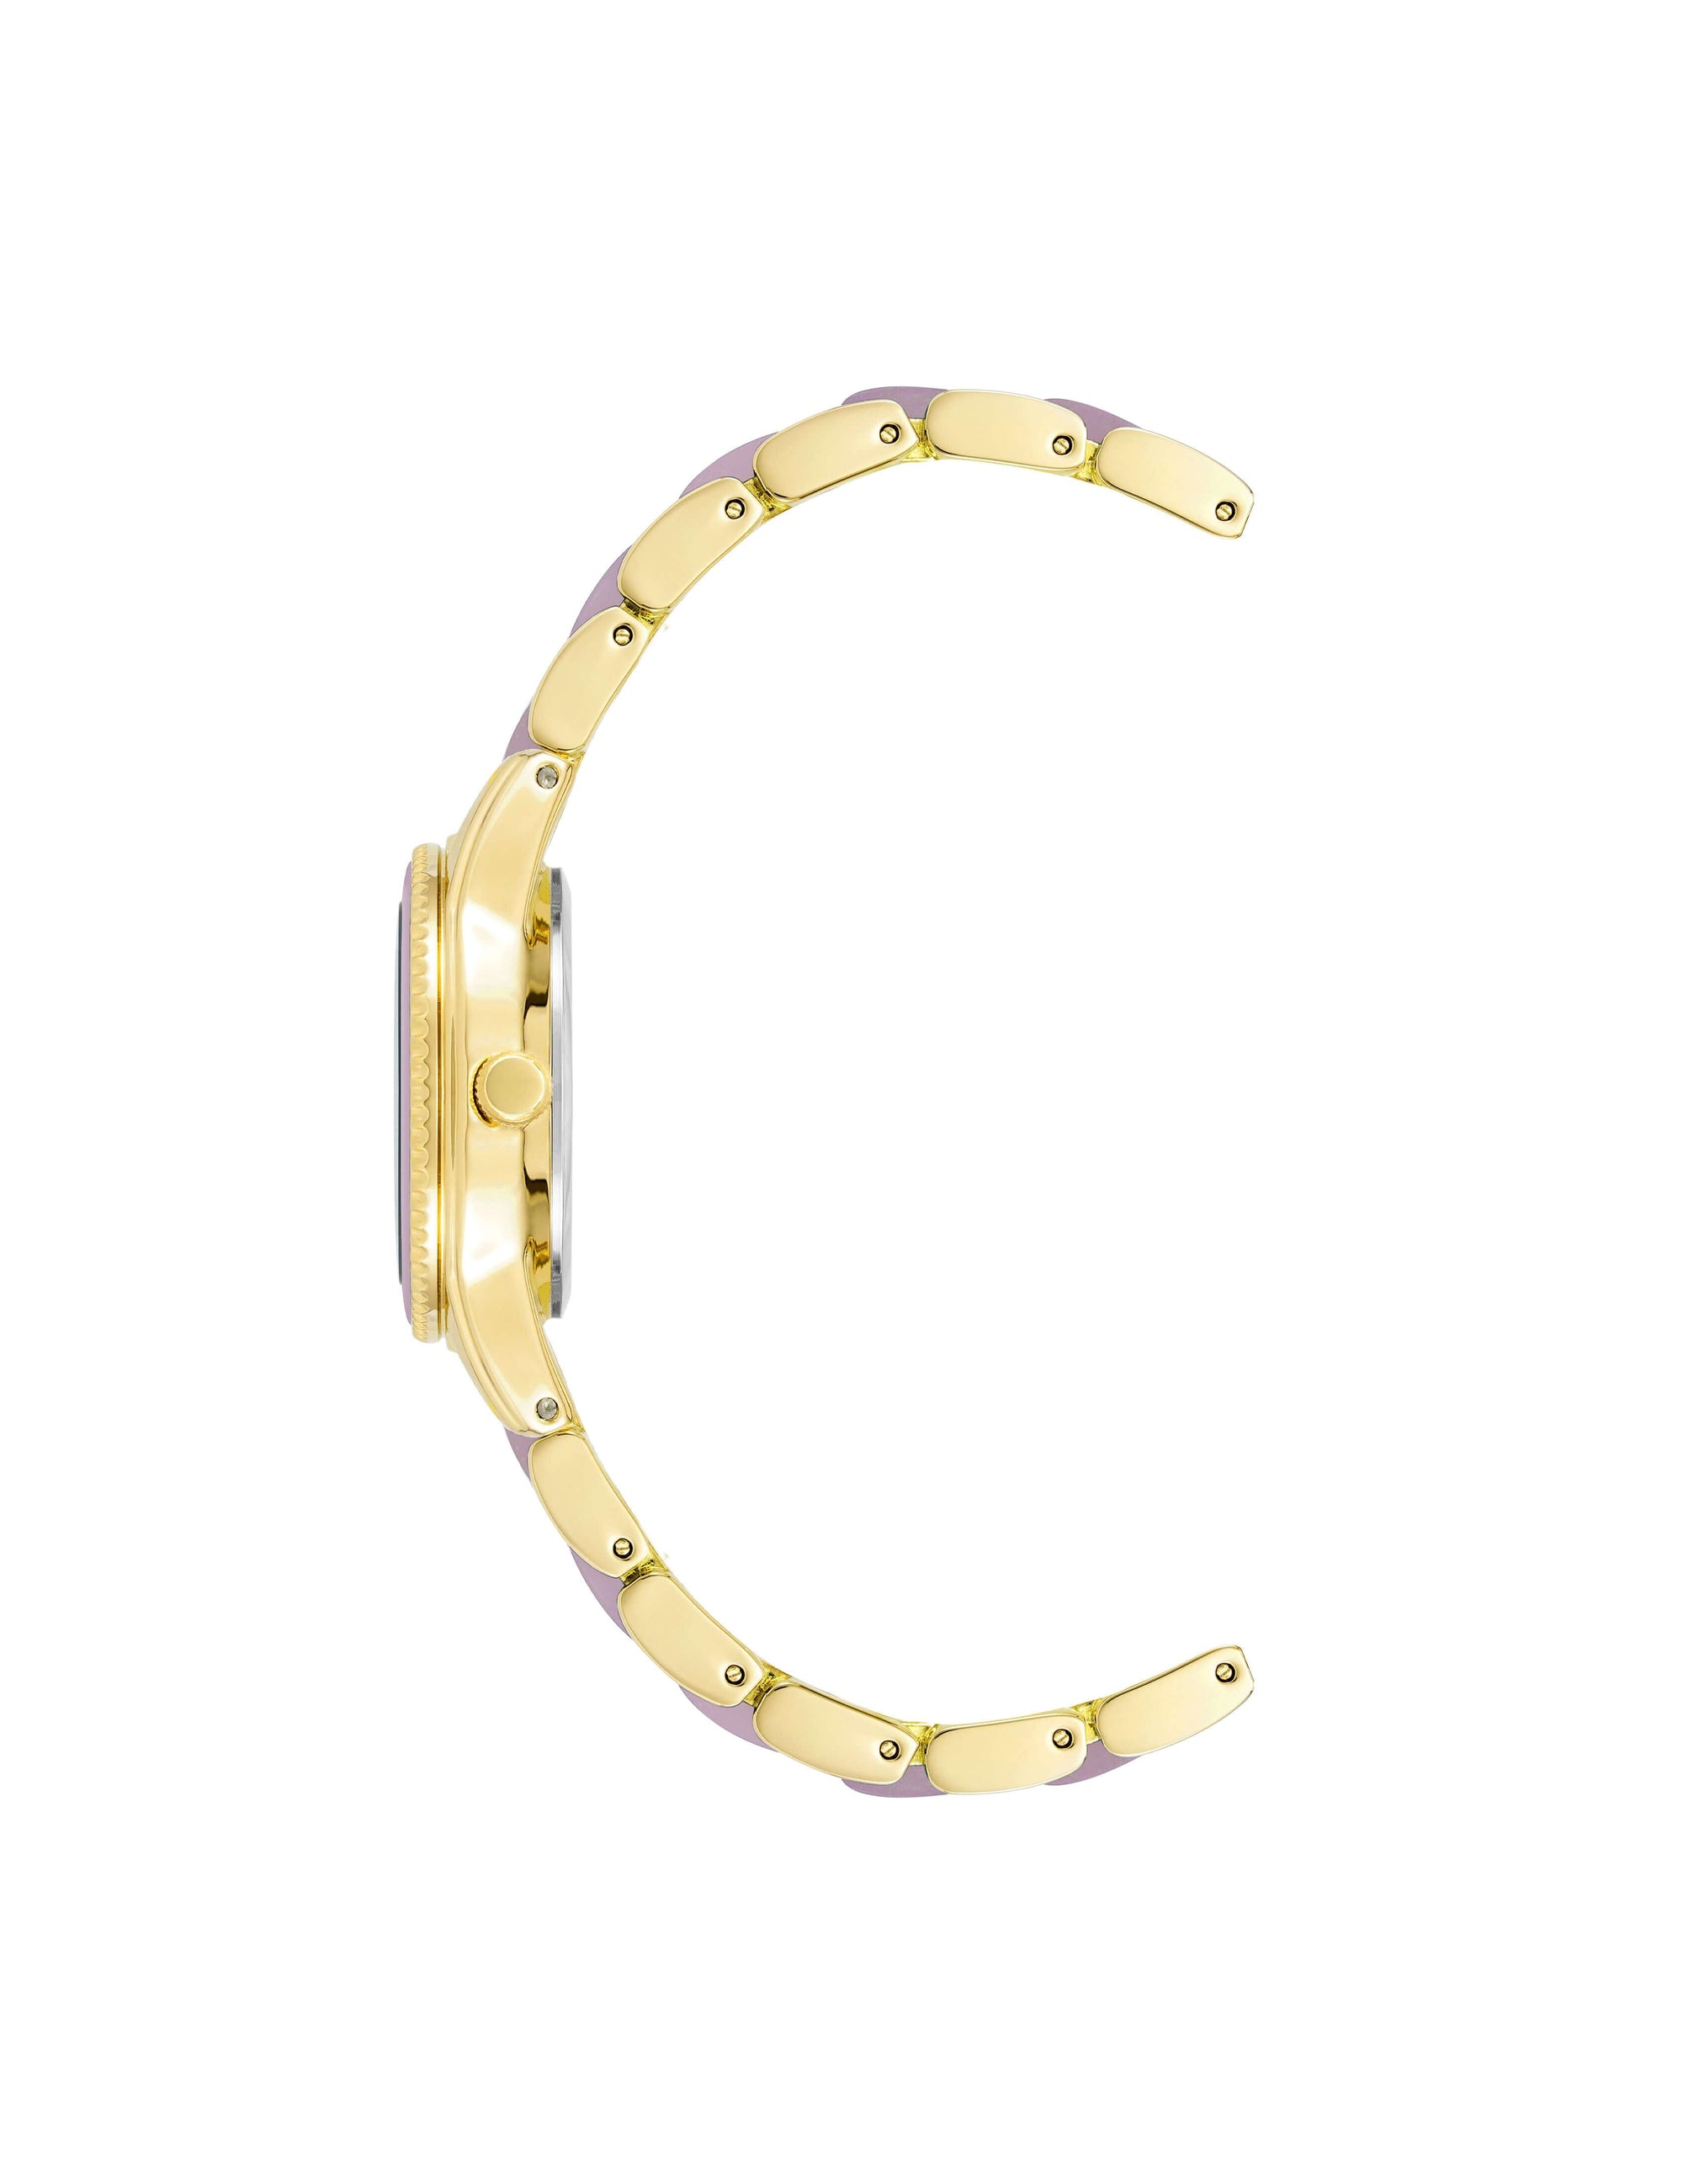 Rado Diastar Ladies Watch, Ceramic Bracelet, Sapp Crystal, Ti Clasp  153.0360.3 | WatchCharts